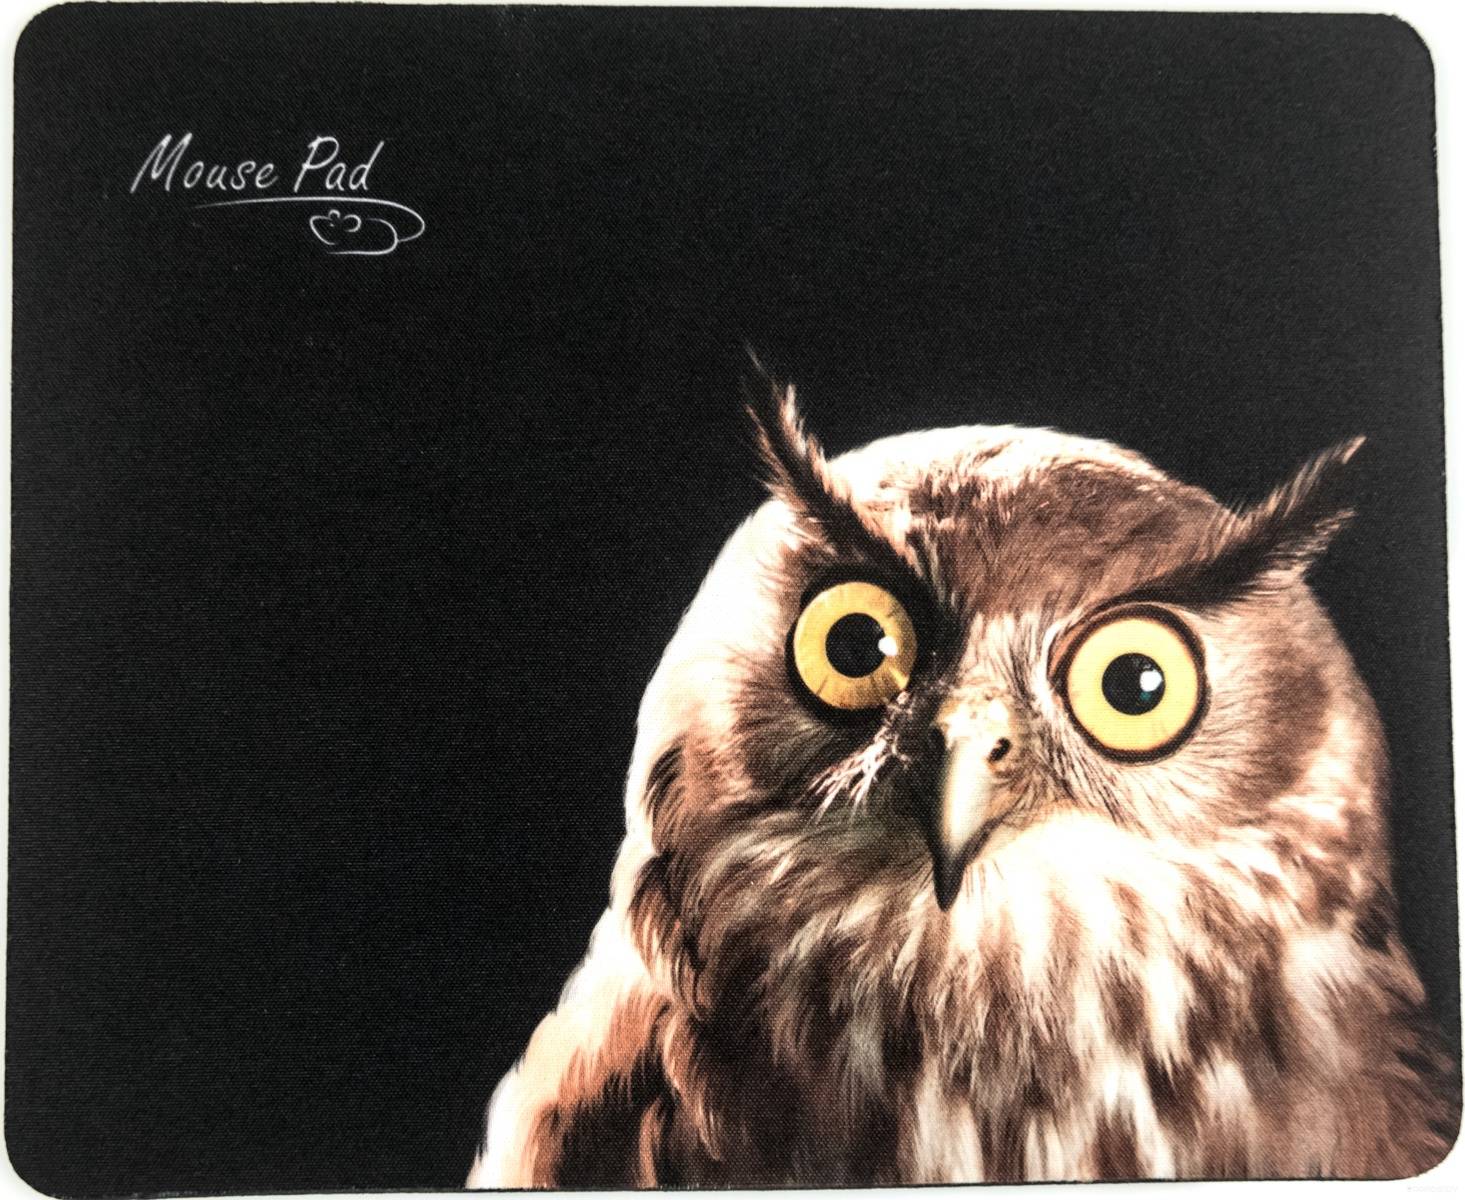    PM-H15 Owl     